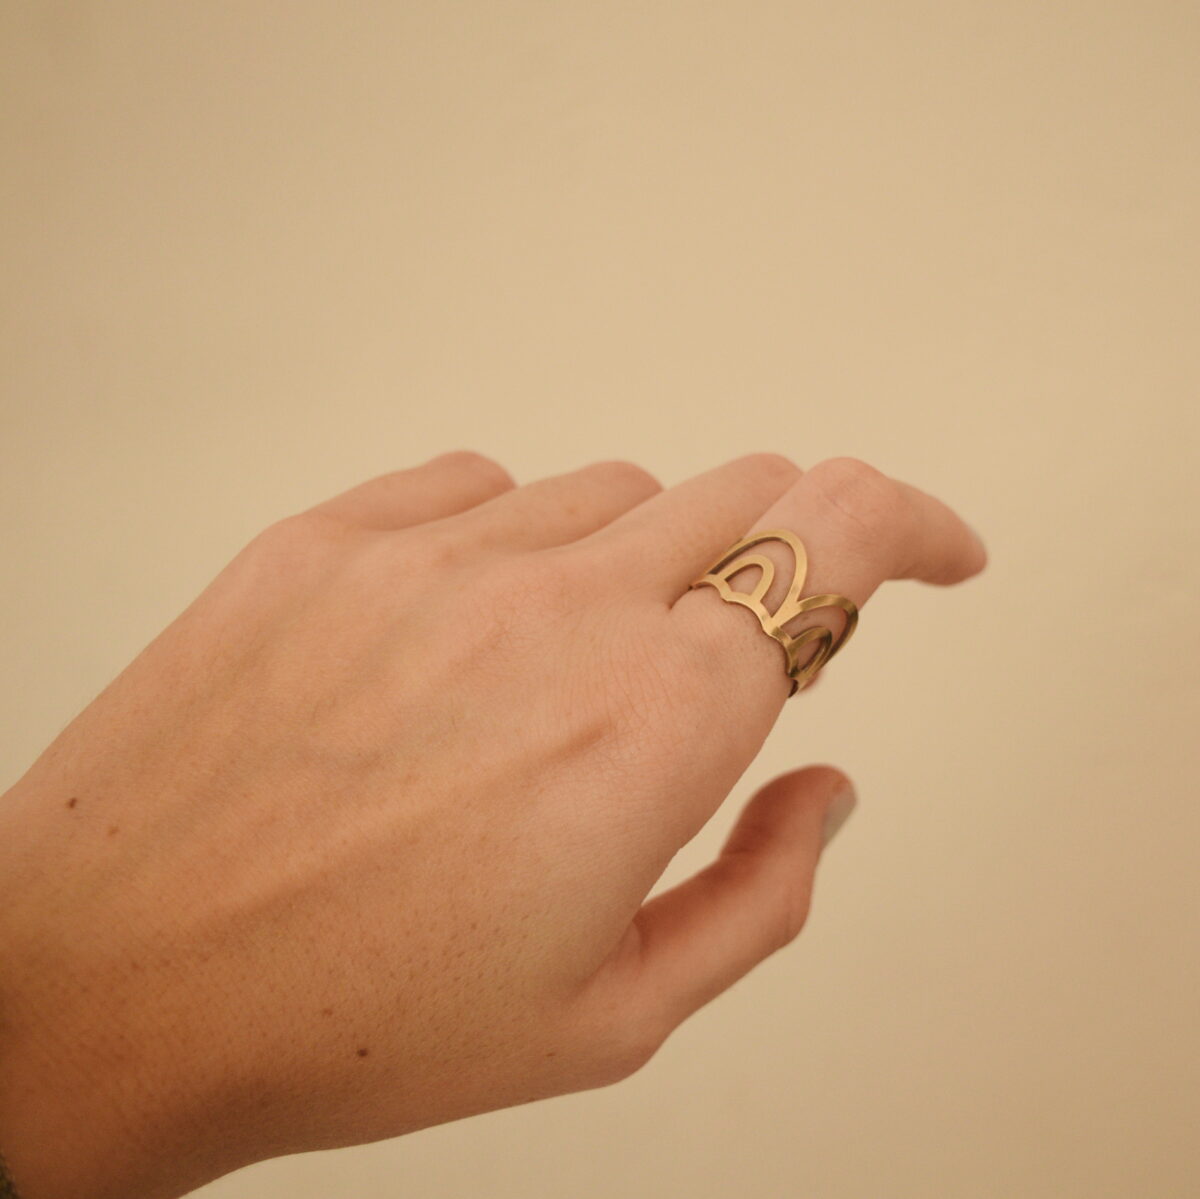 “Cupola” επίχρυσο δαχτυλίδι “Cupola” επίχρυσο δαχτυλίδι “Cupola” επίχρυσο δαχτυλίδι 8